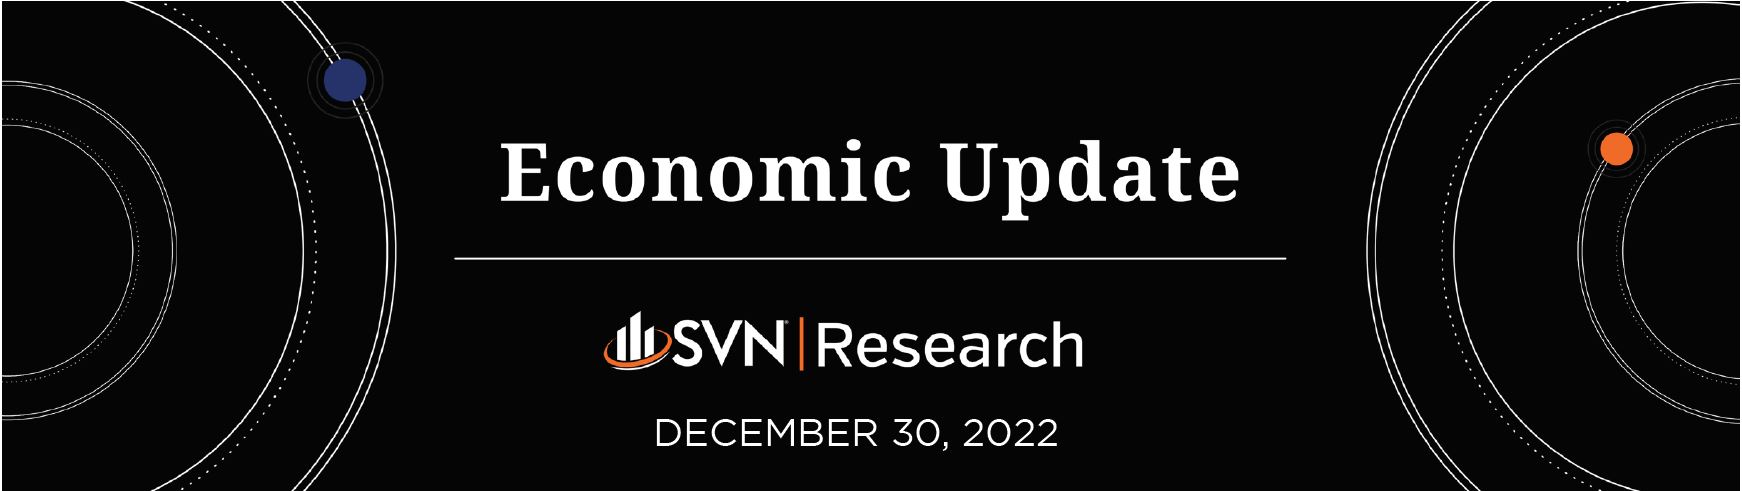 SVN | Research Economic Update 12.30.2022